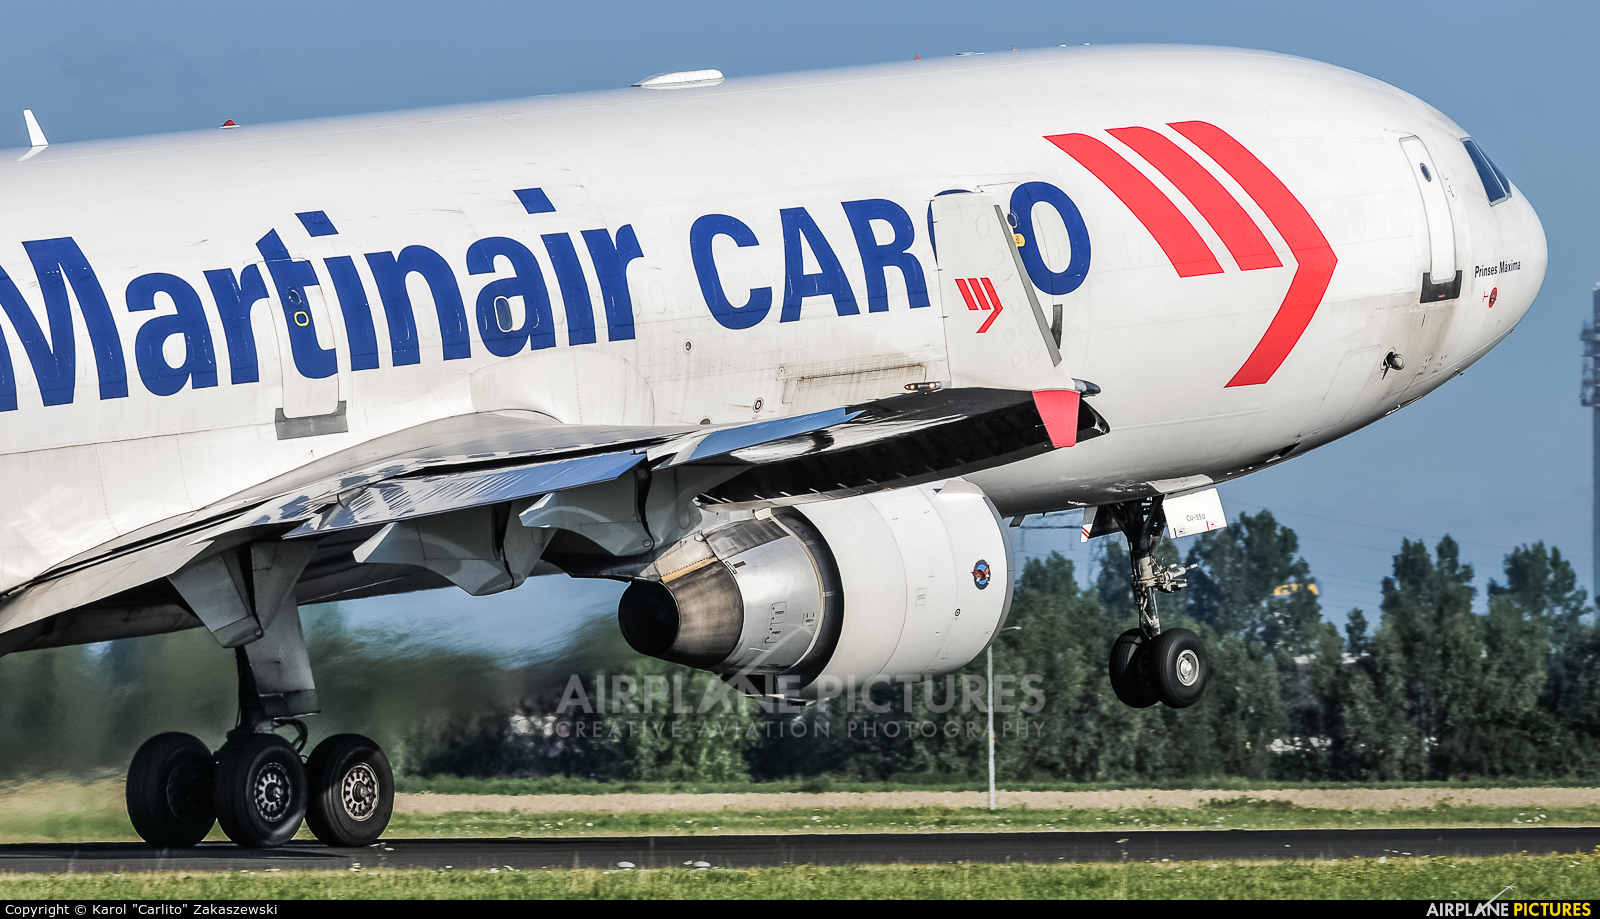 Martinair Cargo PH-MCU aircraft at Amsterdam - Schiphol